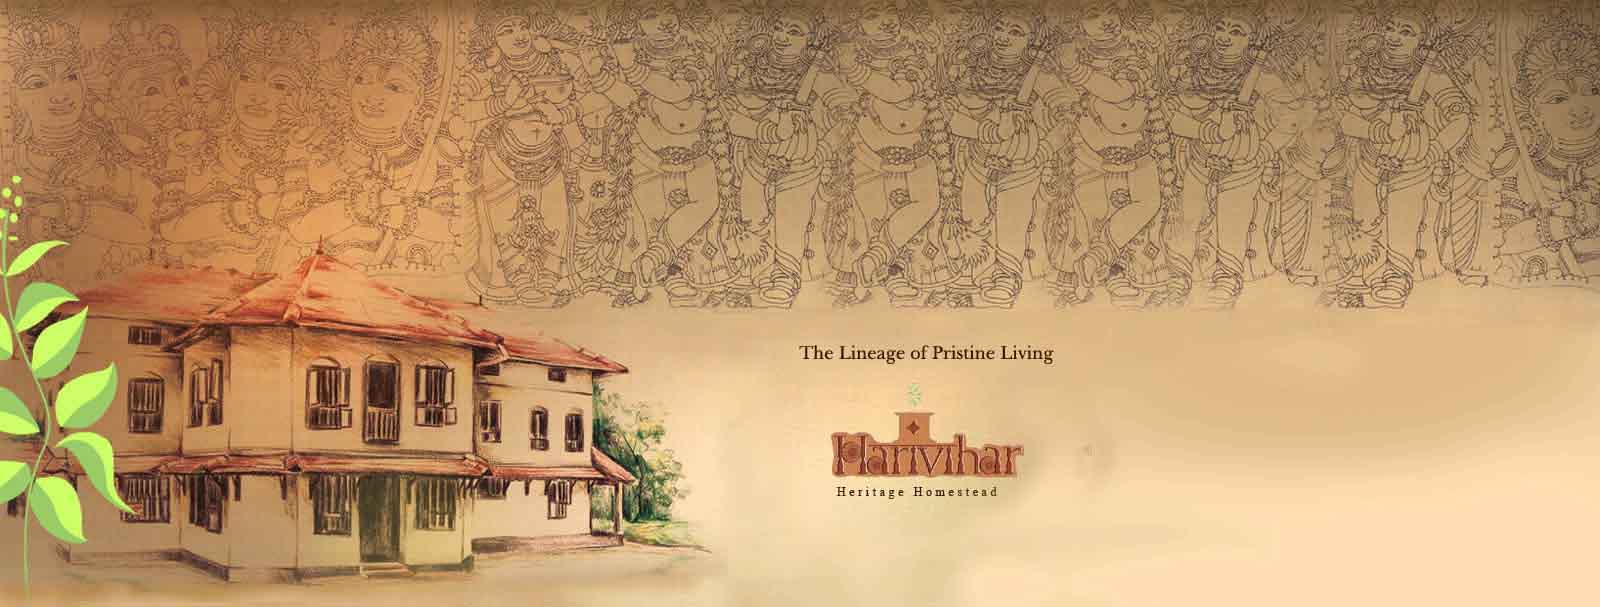 harivihar ayurvedic heritage home kerala11517050808.jpg